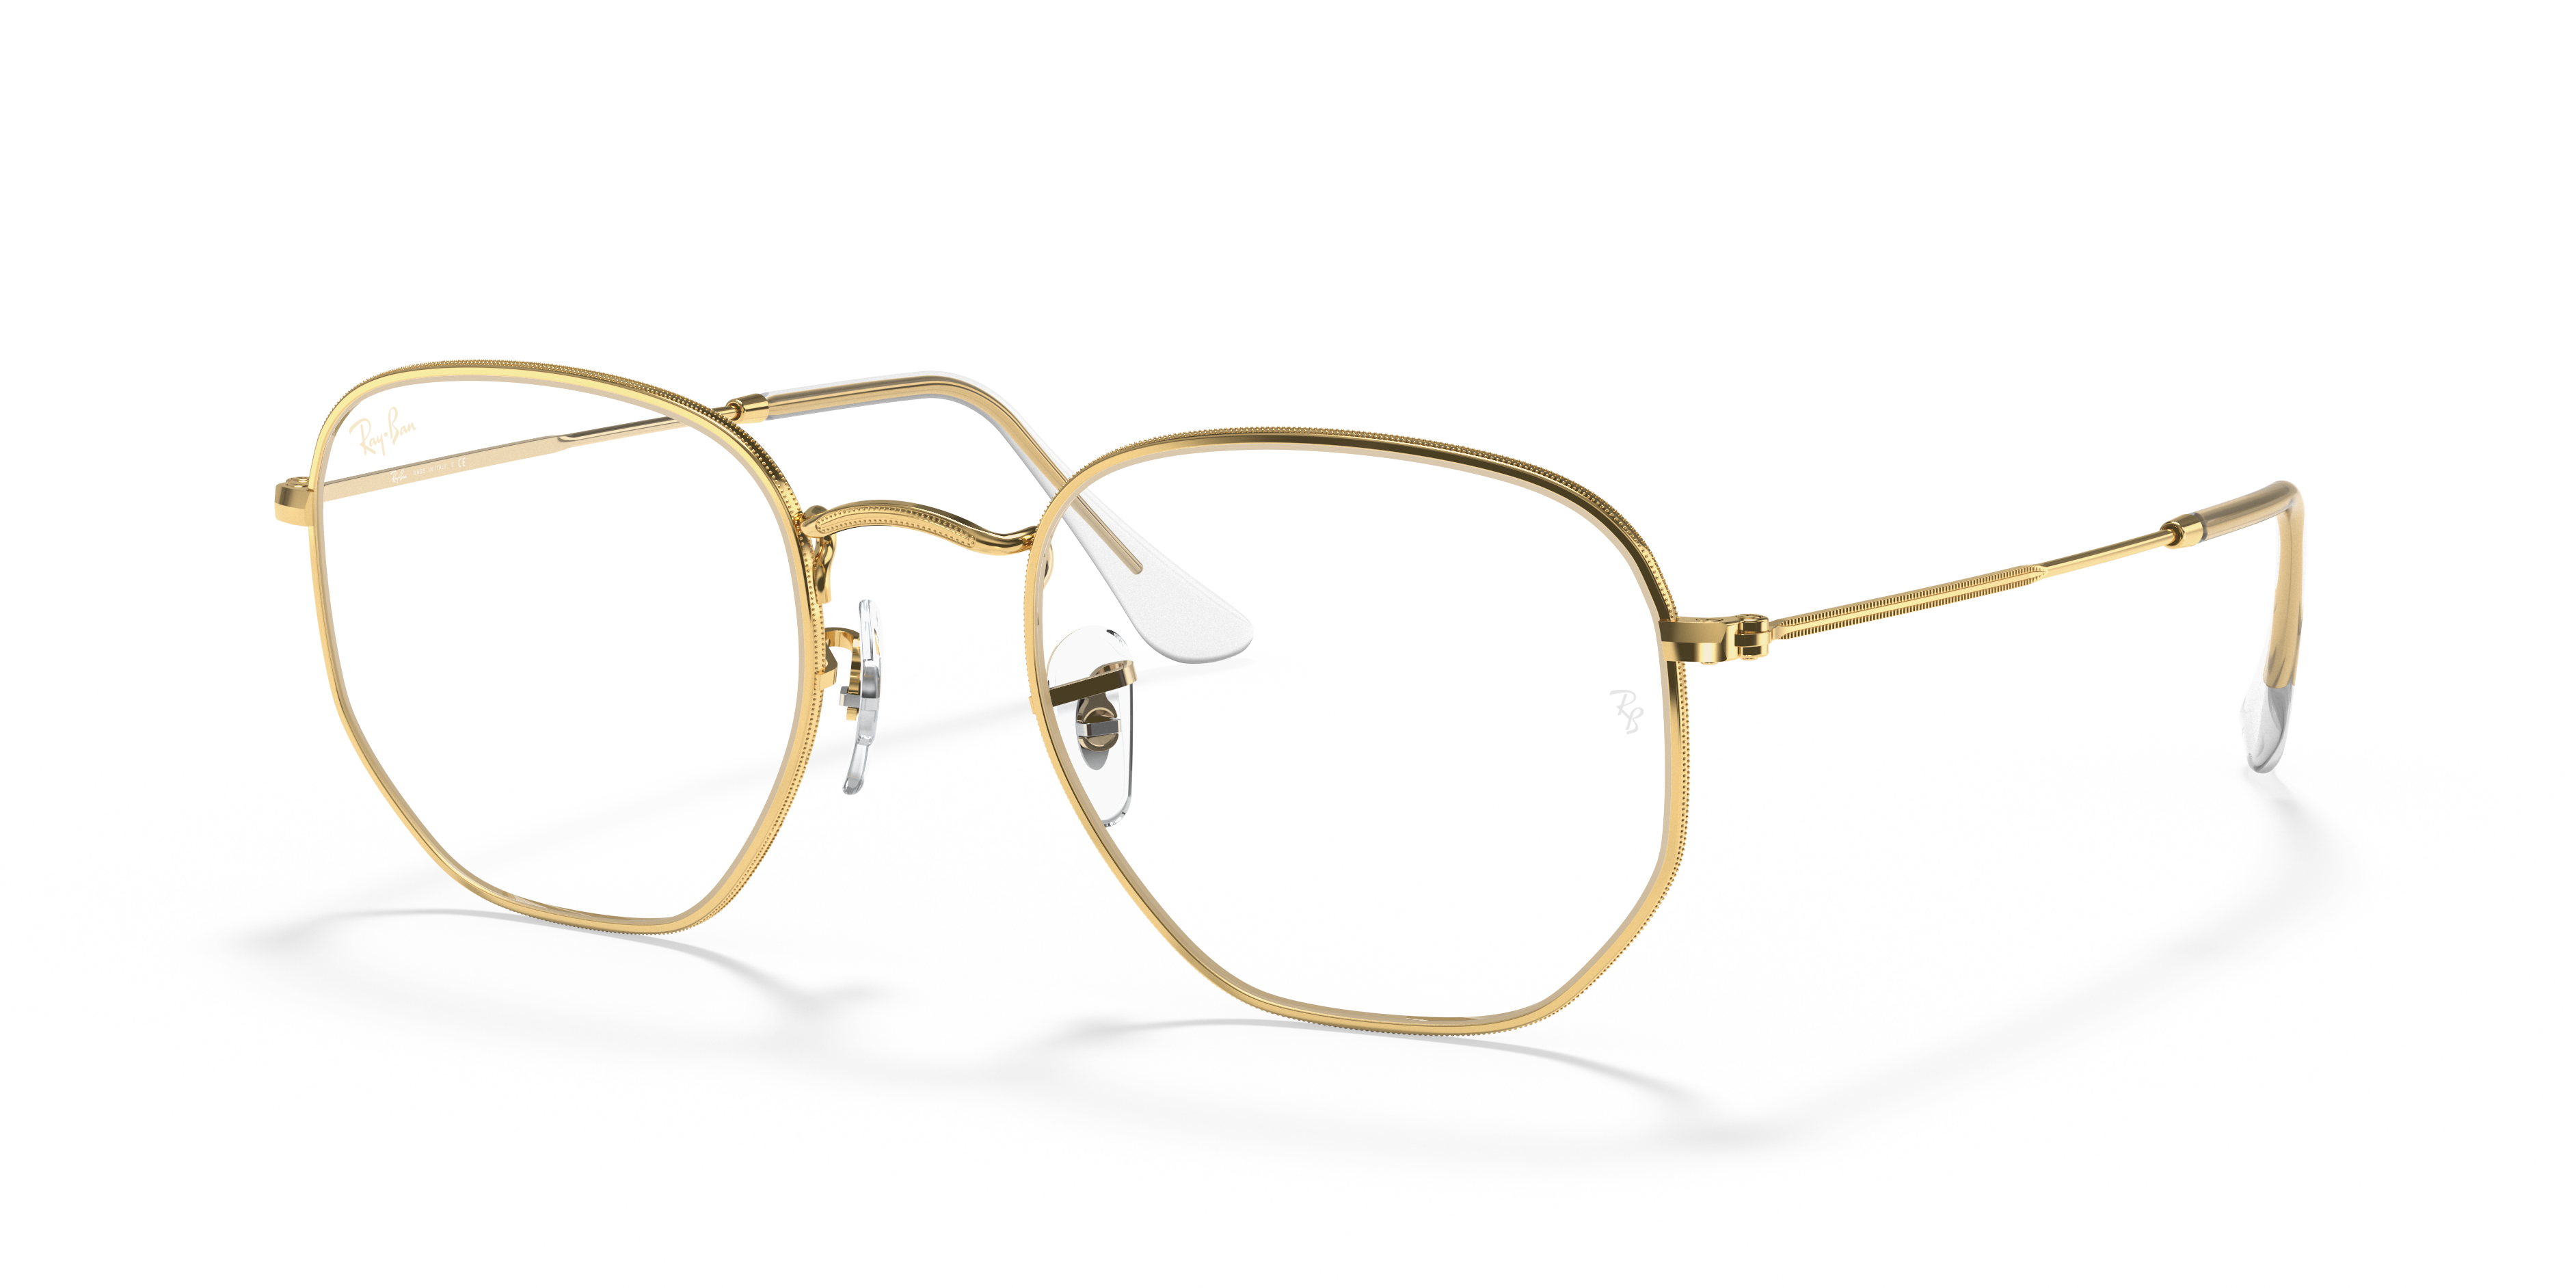 Gucci GG0010S Fashion Sunglasses 58mm - Black/Grey 889652047560 | eBay